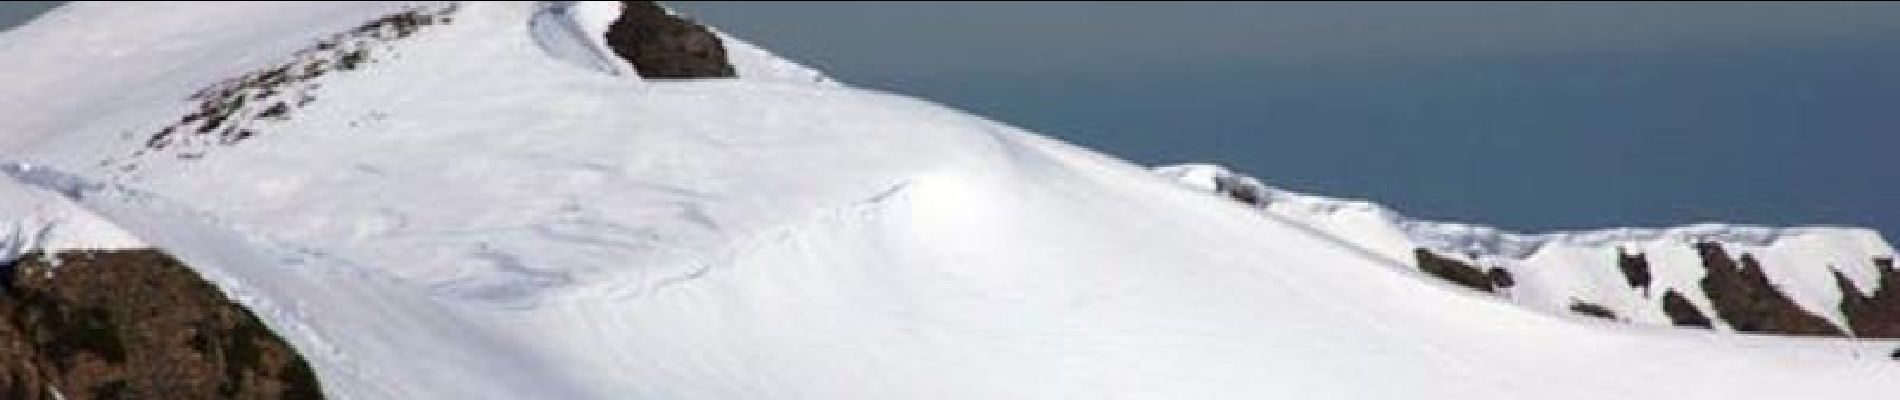 Percorso Racchette da neve Artigue - Le Pic de Bacanère - Photo